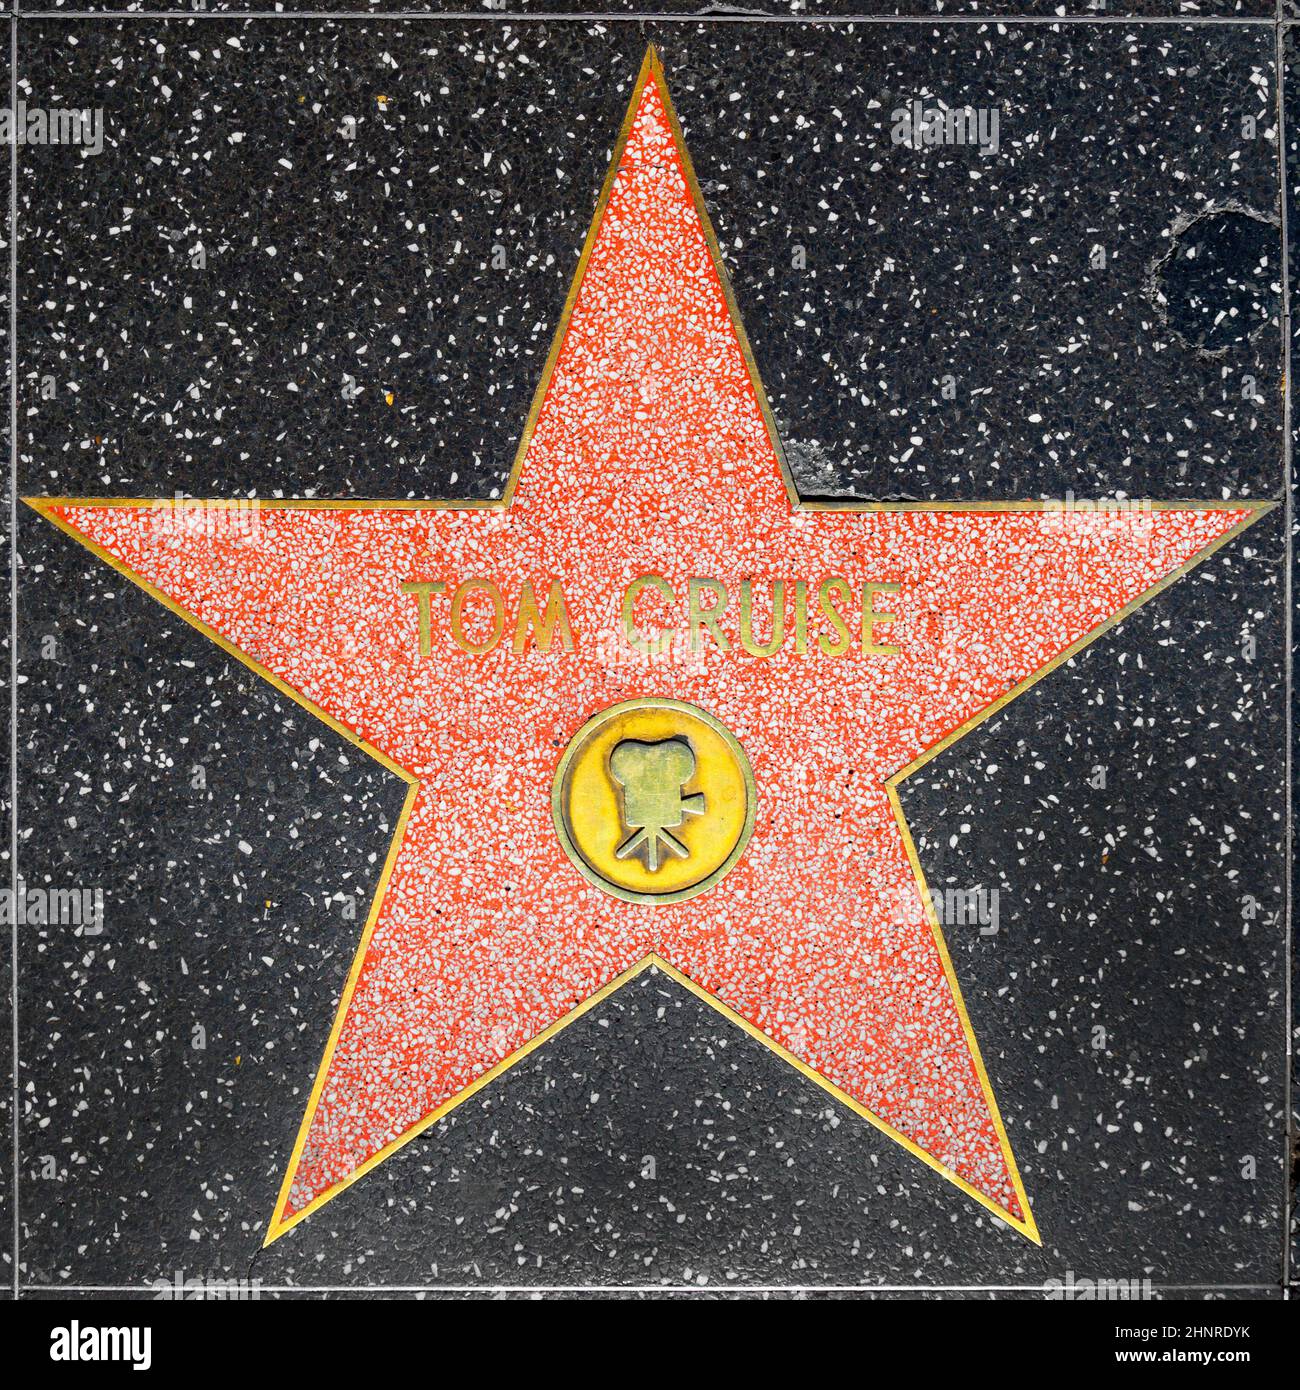 Tom Cruises star on Hollywood Walk of Fame Stock Photo